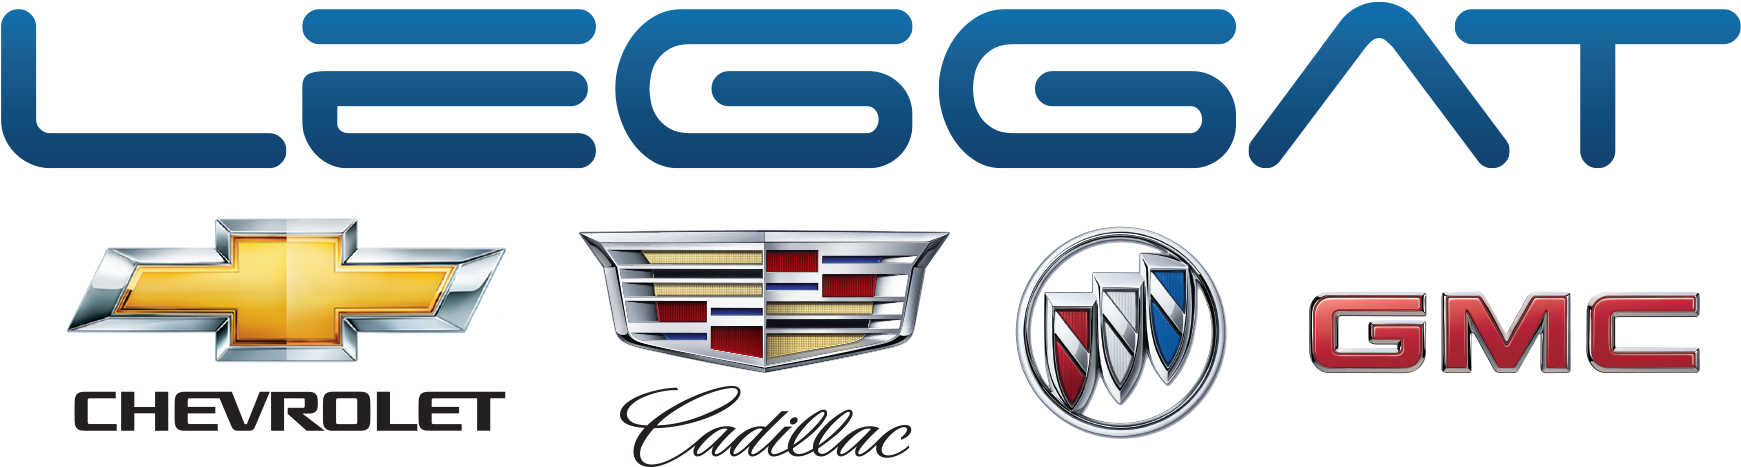 Leggat Chevrolet, Cadillac, Buick, GMC Limited